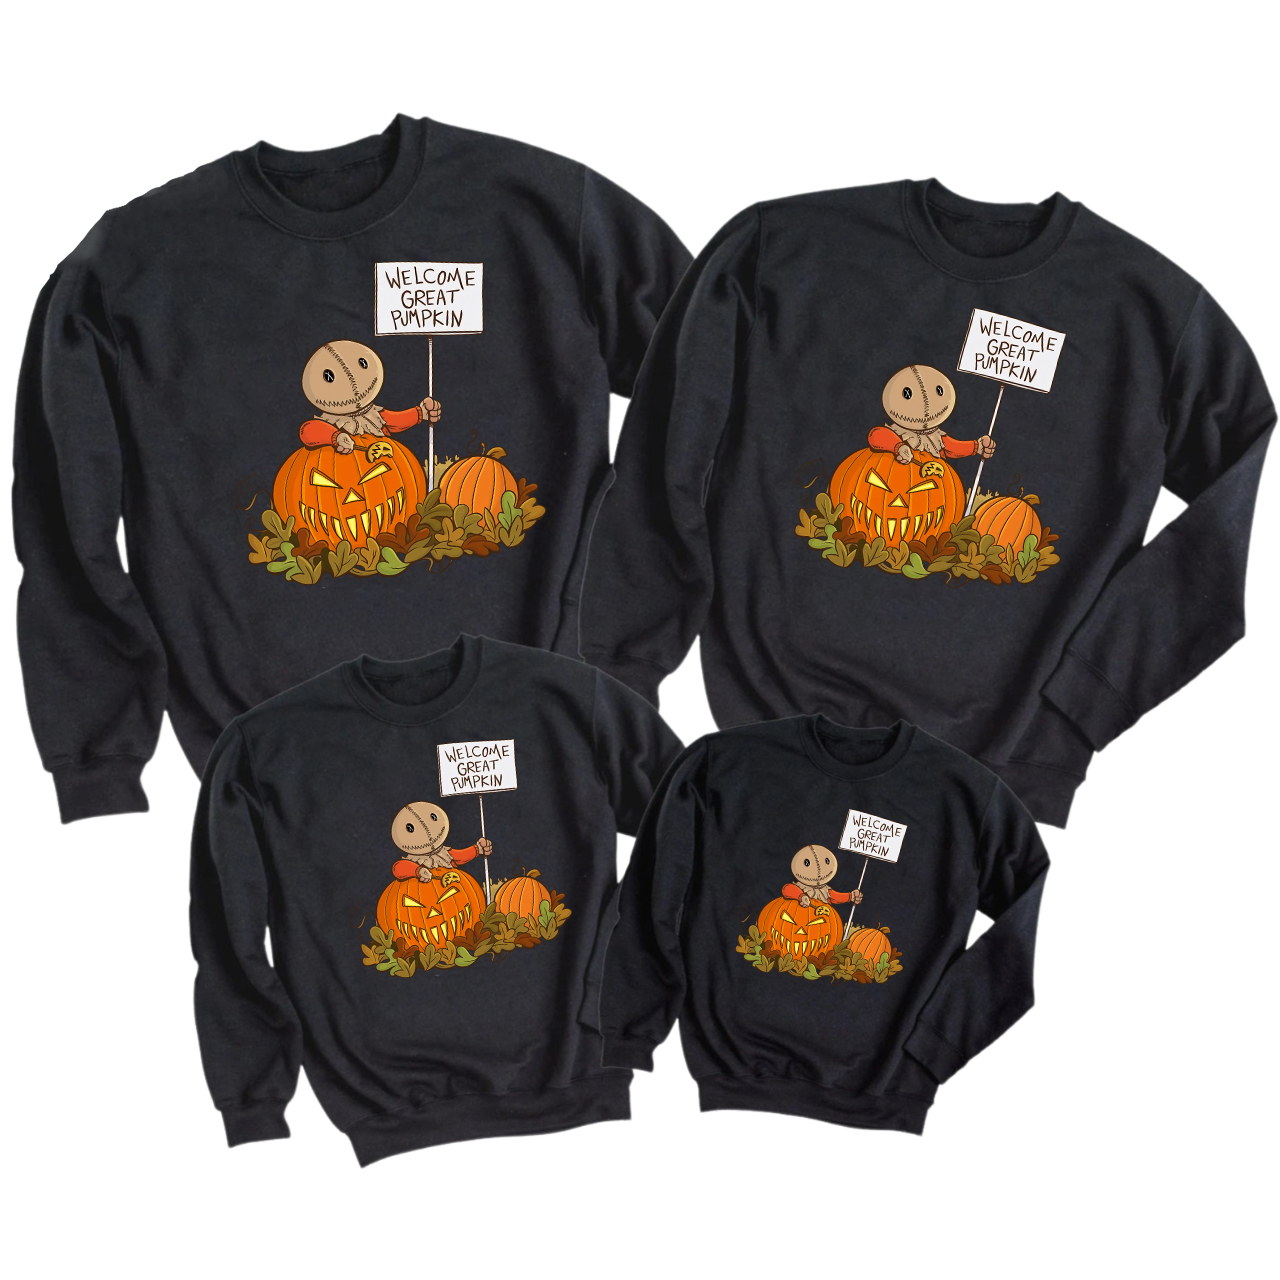 Welcome Great Pumpkin Halloween Matching Sweatshirts